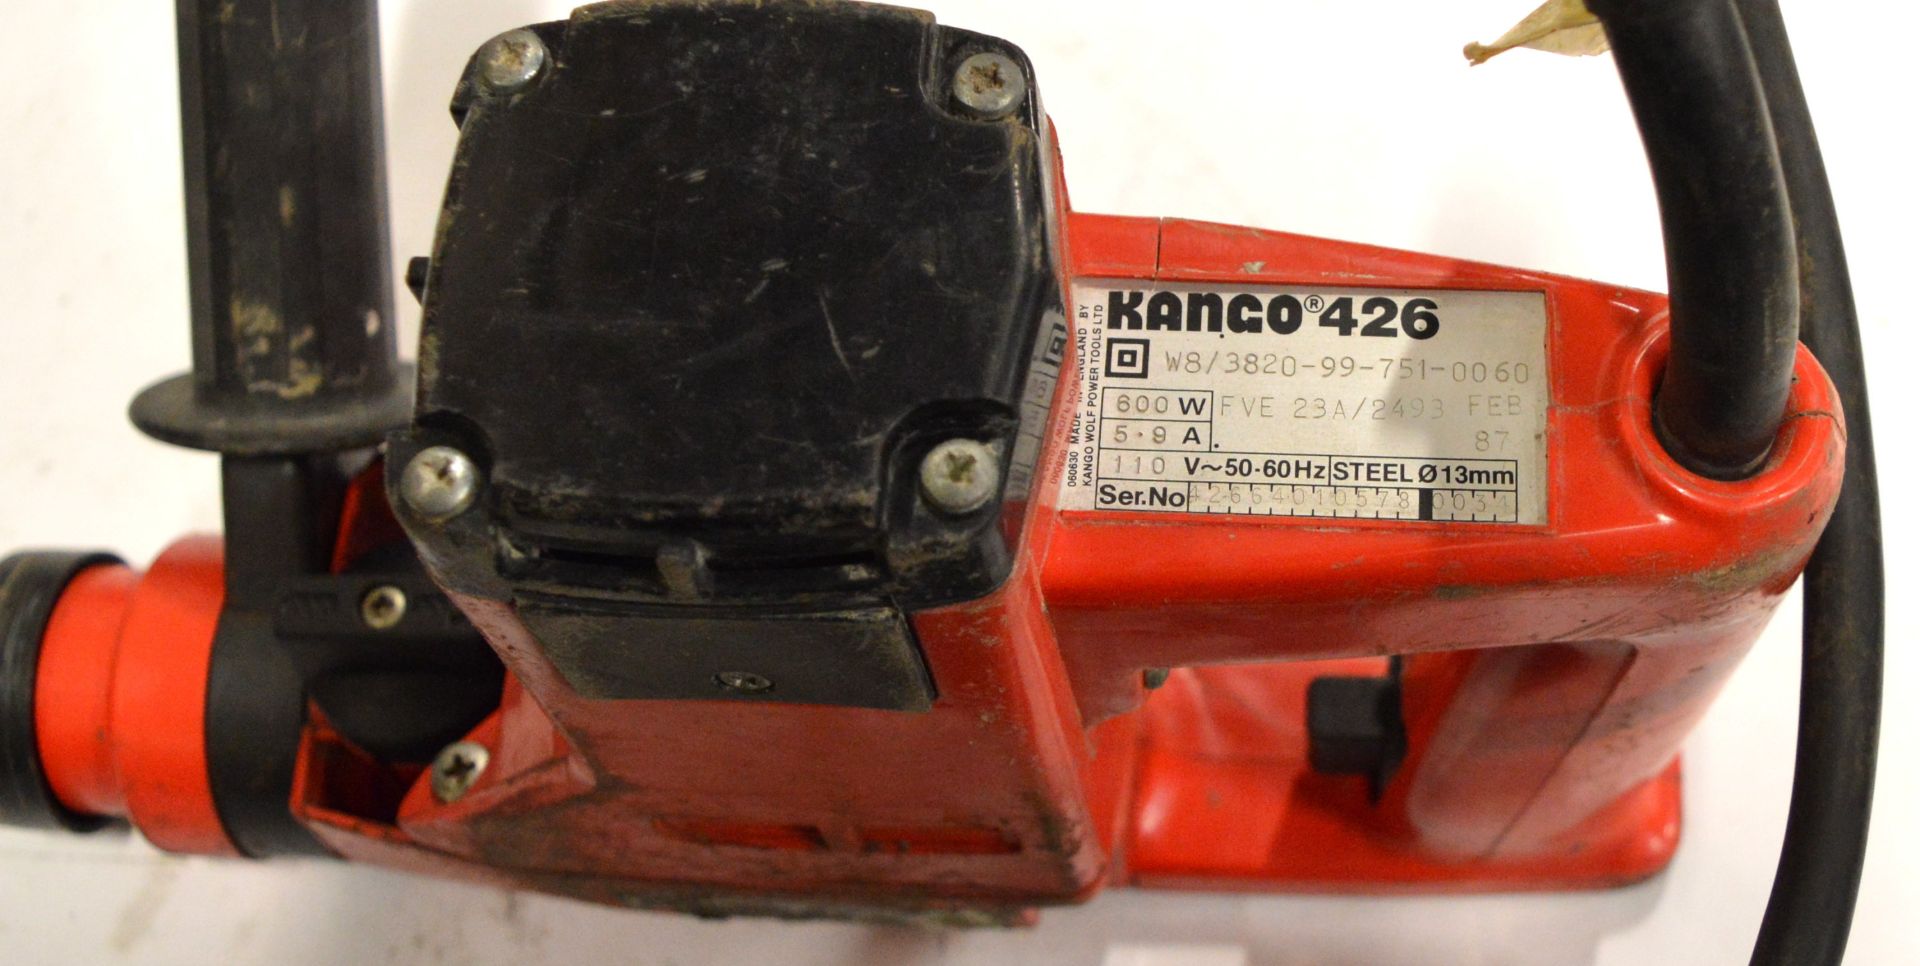 Kango 426 Hammer Drill - 110V. - Image 4 of 4